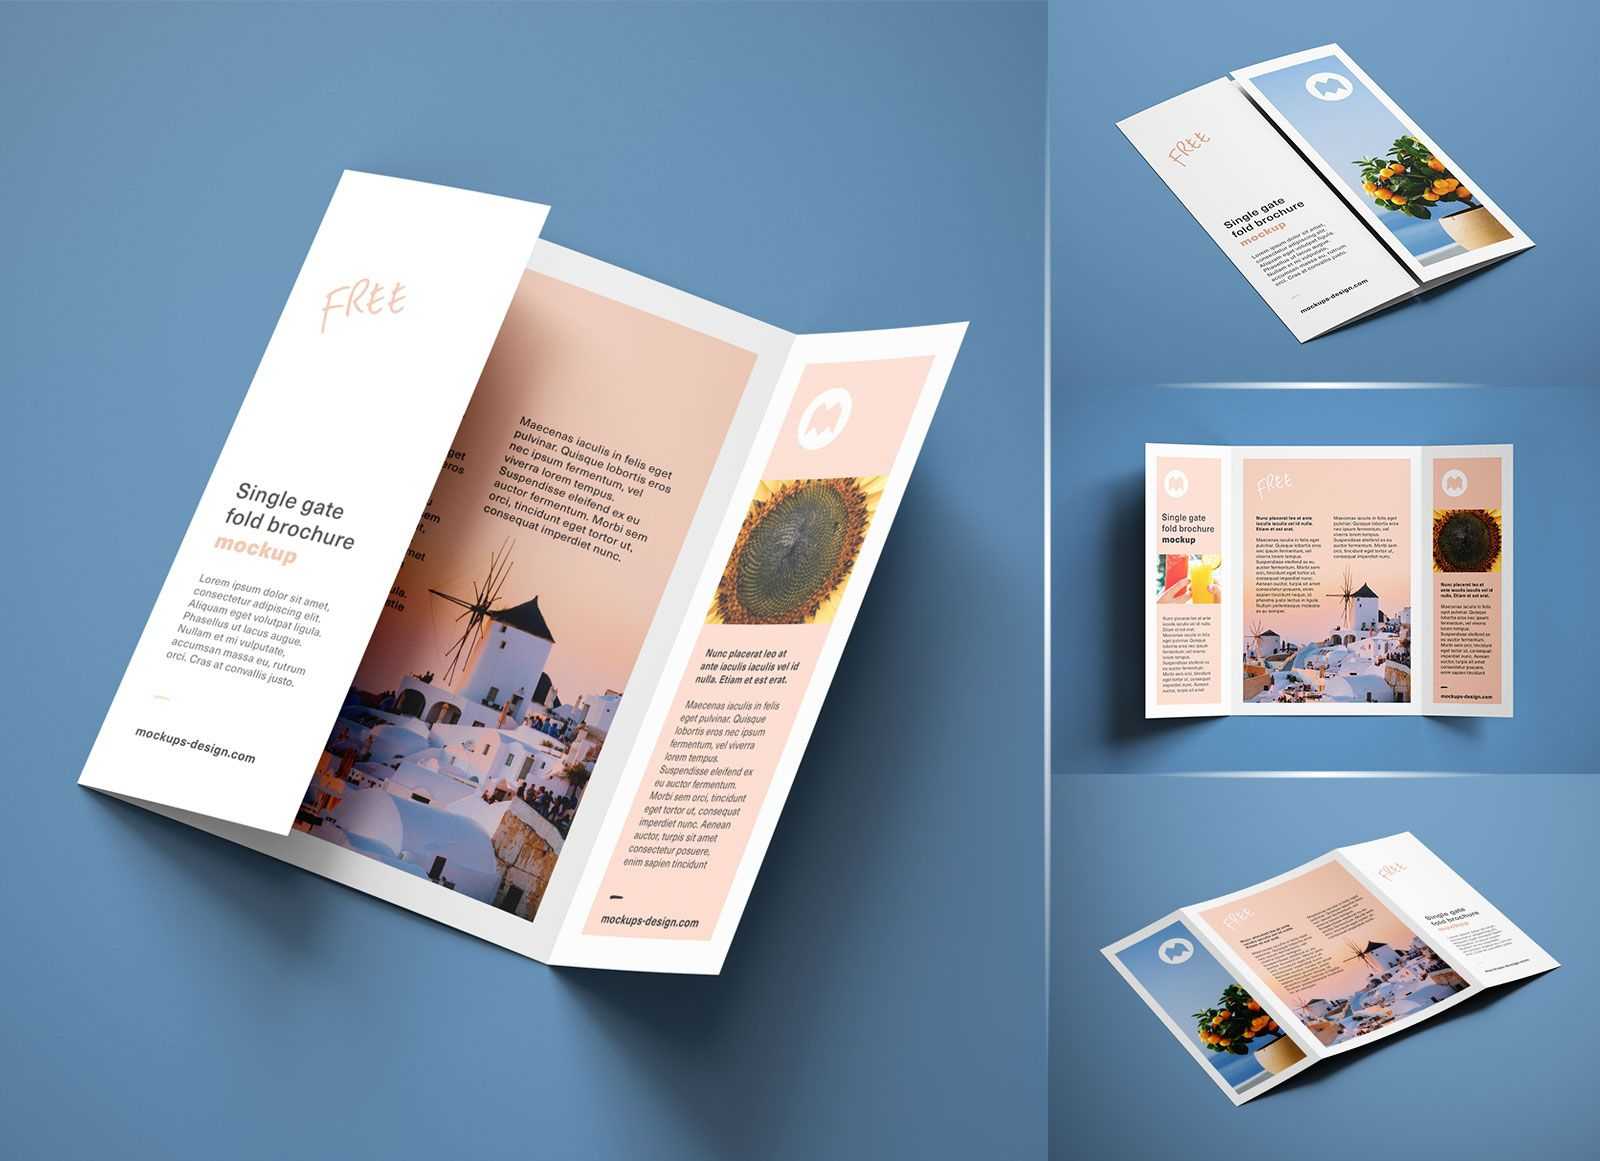 Free A4 Single Gate Fold Brochure Mockup Psd Set | Free Inside Gate Fold Brochure Template Indesign